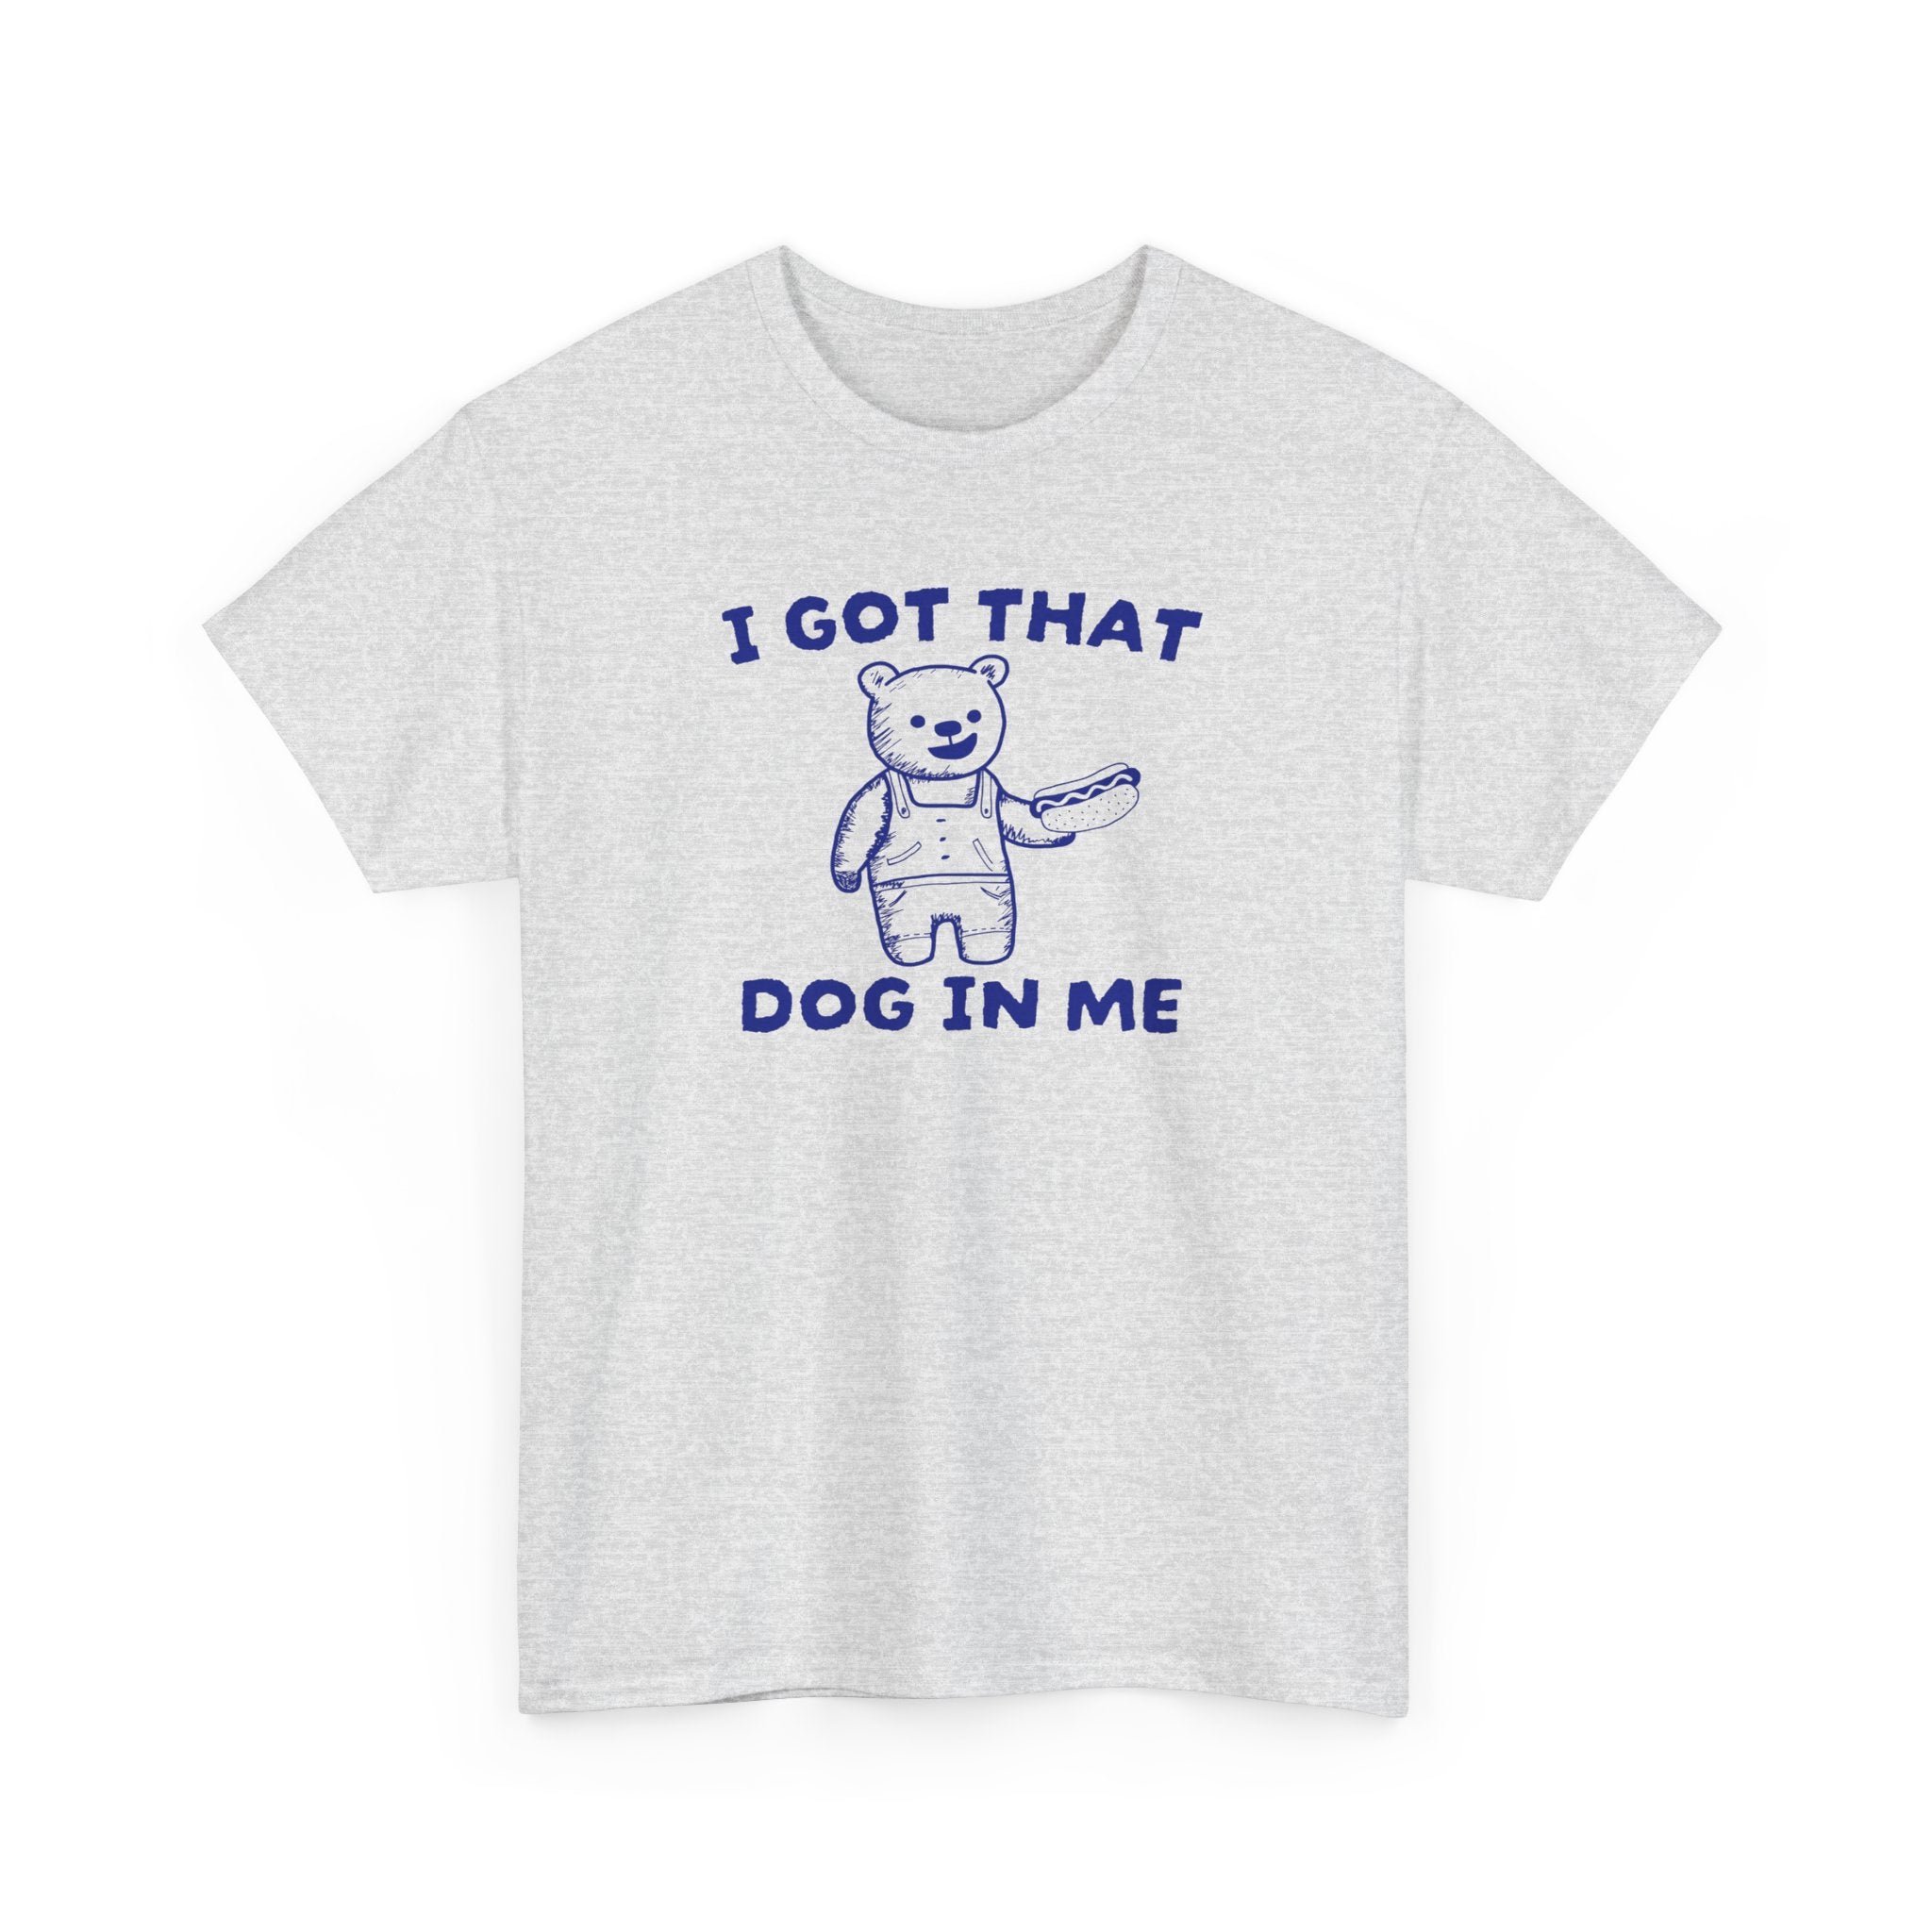 I got that dog in me Shirt